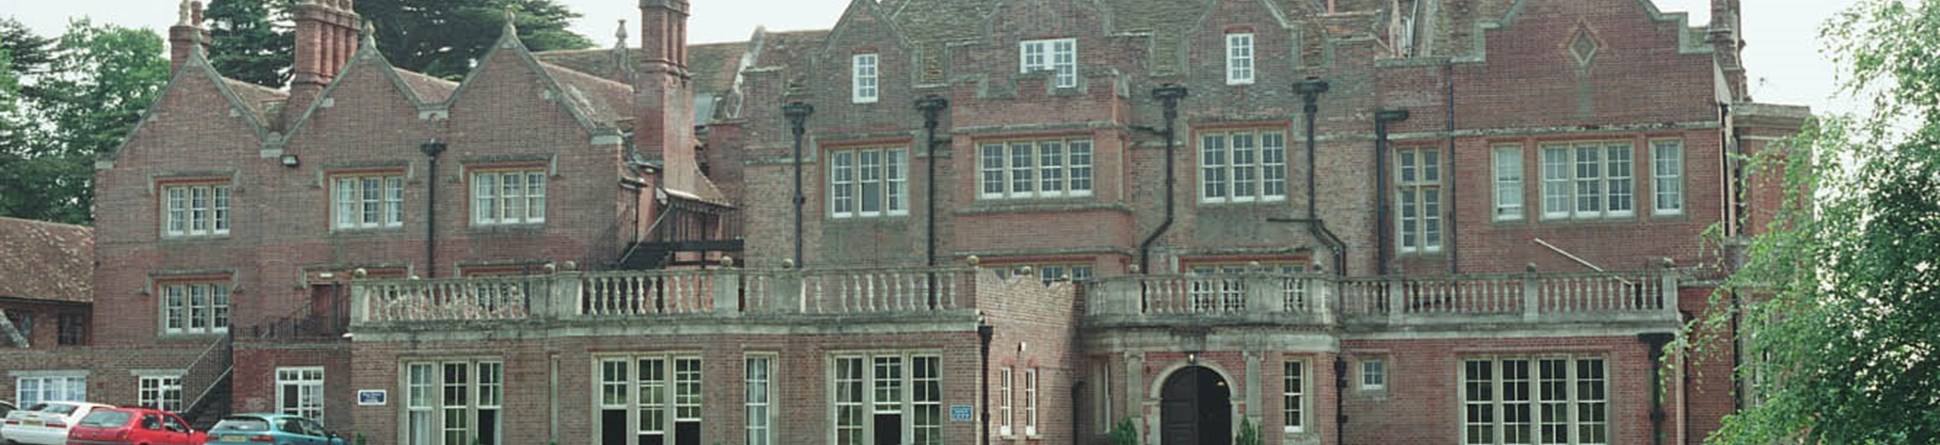 Embley House, Hampshire, childhood home of Florence Nightingale